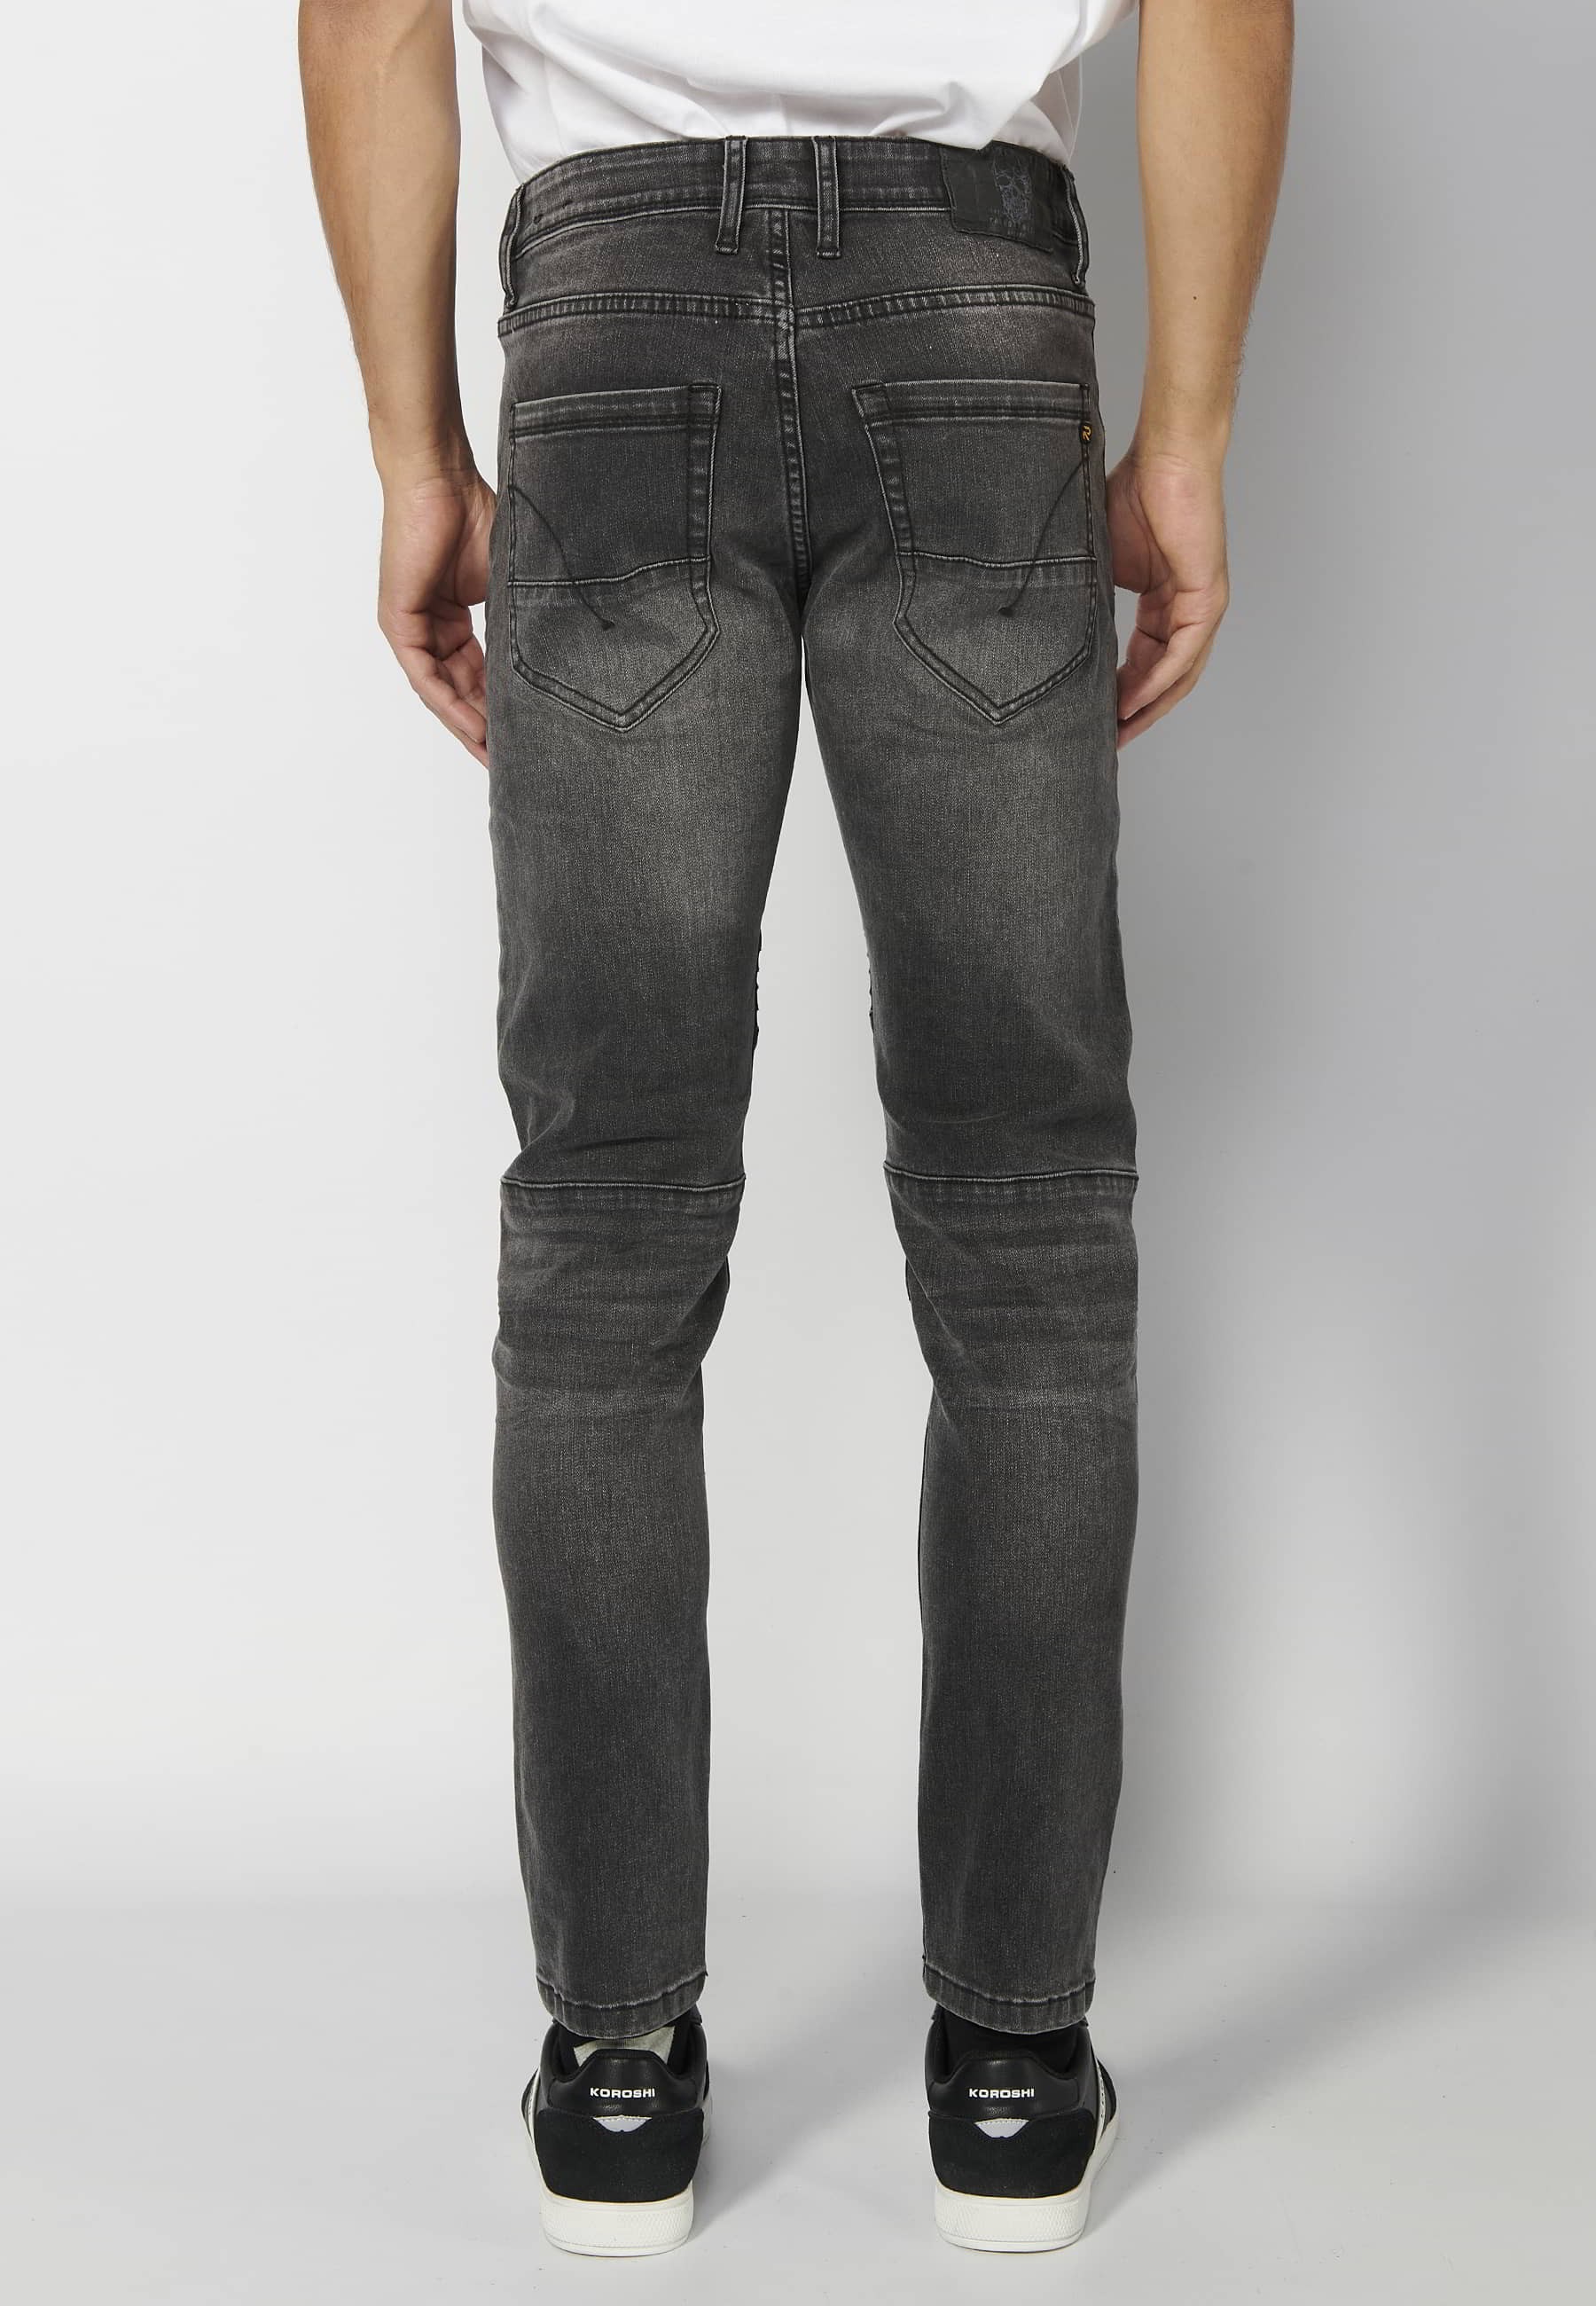 Long skinny fit pants, with five pockets, worn black color for Men 7